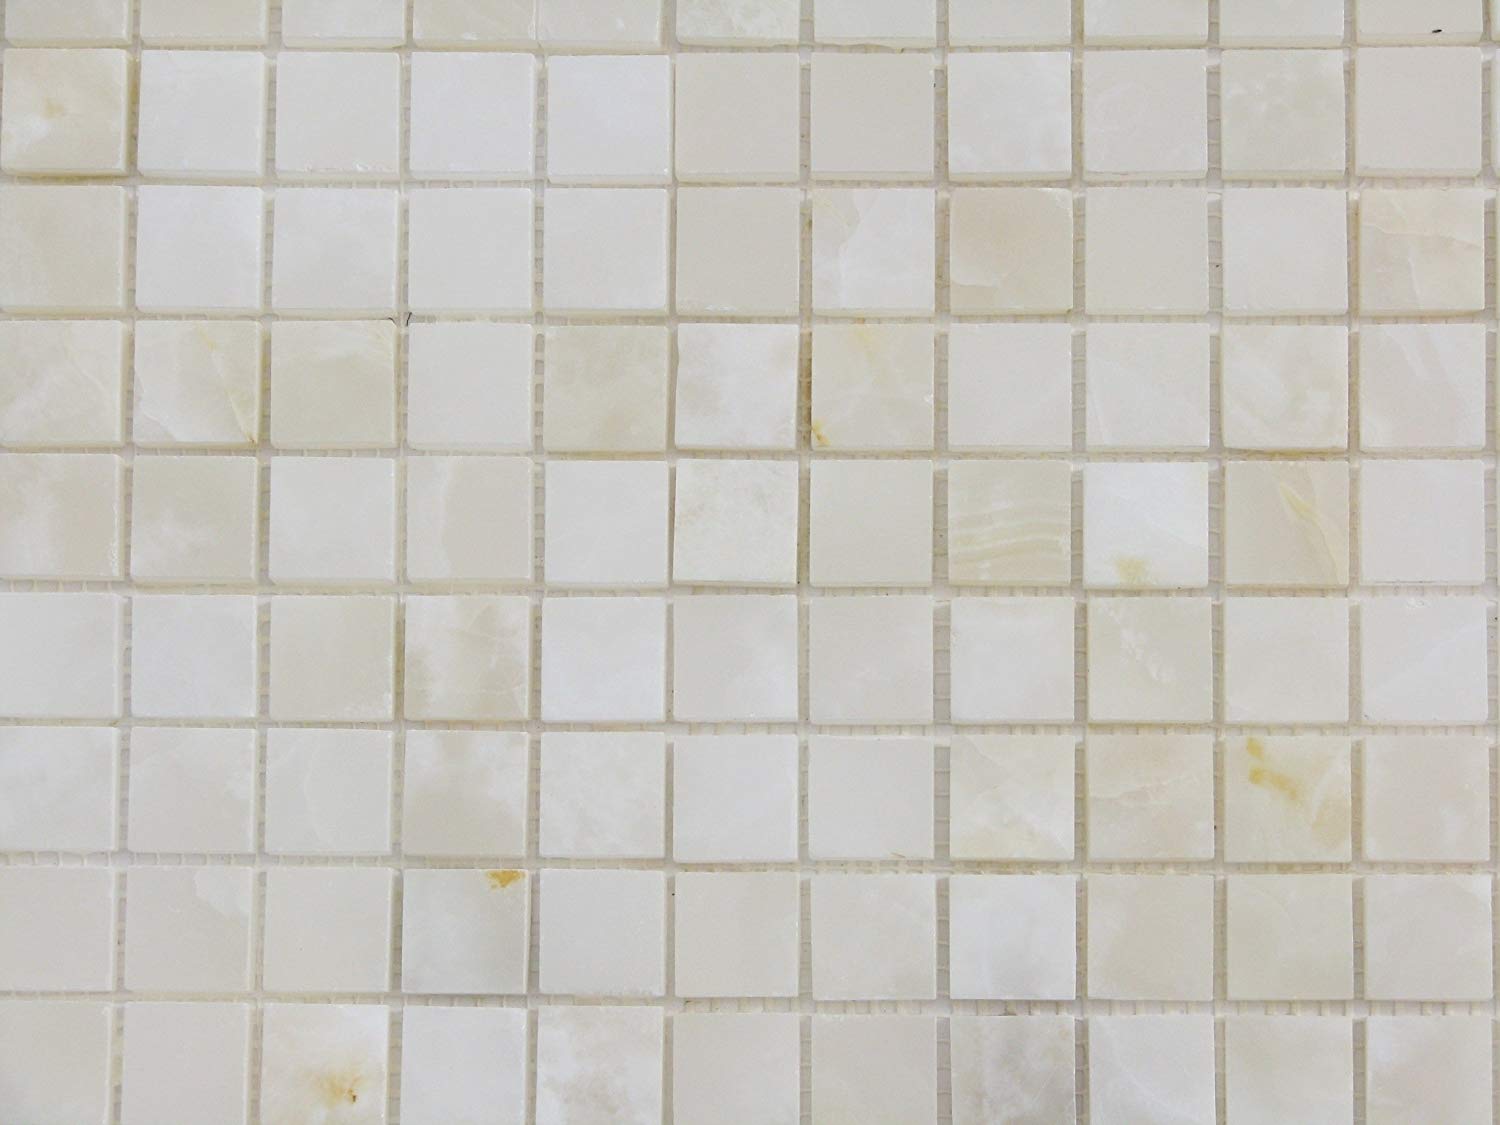 1x1 White Onyx Polished Marble Mosaic Tiles Meshed on 12x12 Sheet for Backsplash, Shower Walls, Bathroom Floors